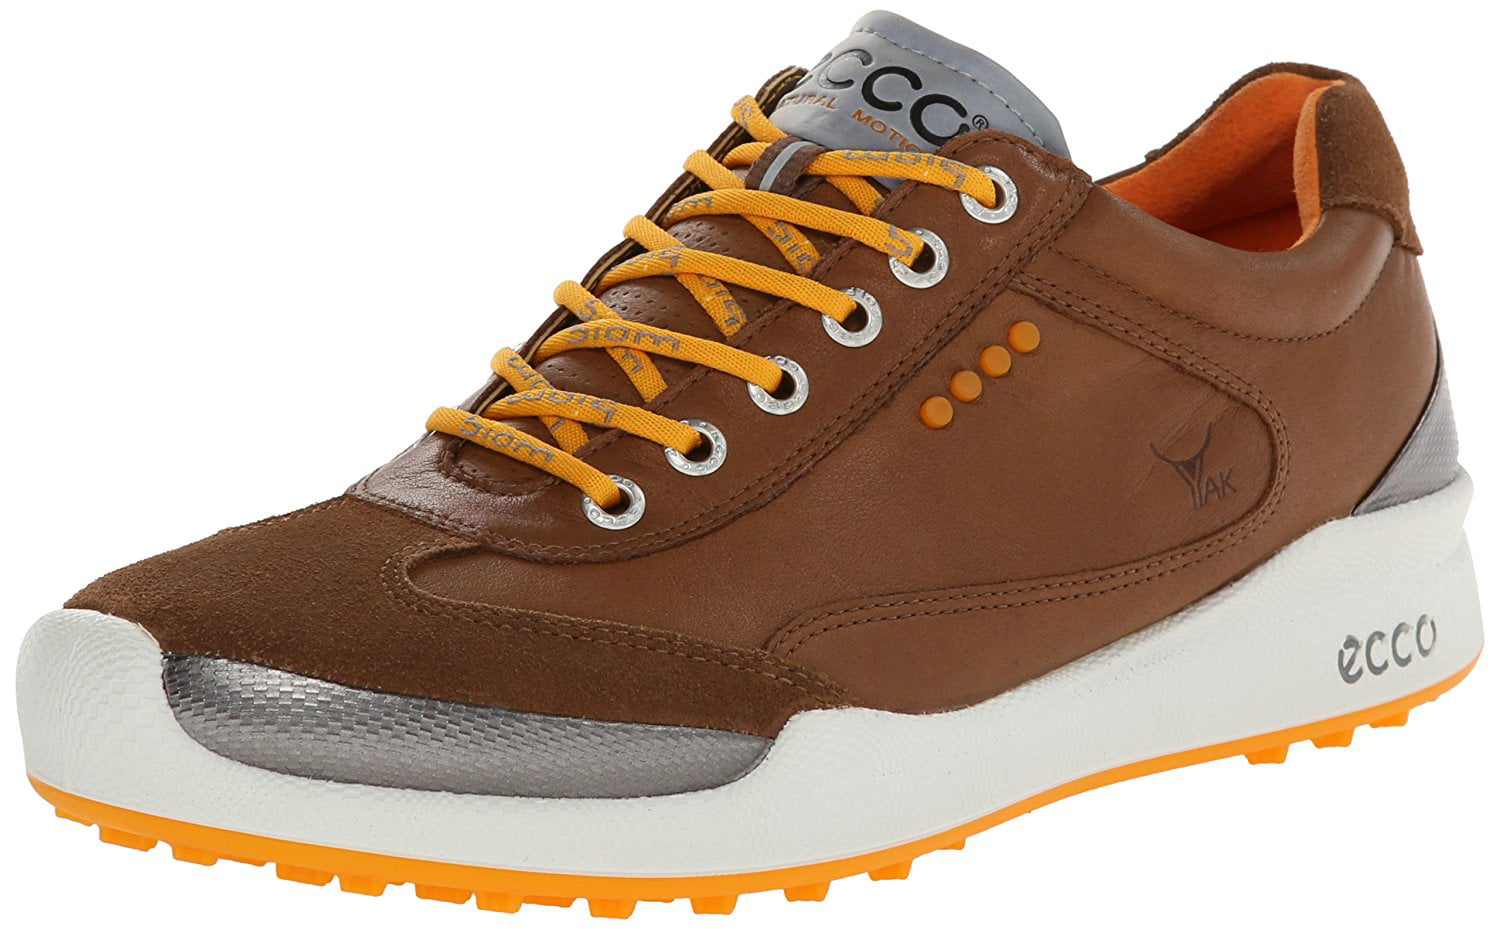 Learner Panter eksperimentel ECCO Men's Biom Hybrid 2 Golf Shoes Camel/Fanta Size 45.0 EU / 11-11.5M US  - Walmart.com